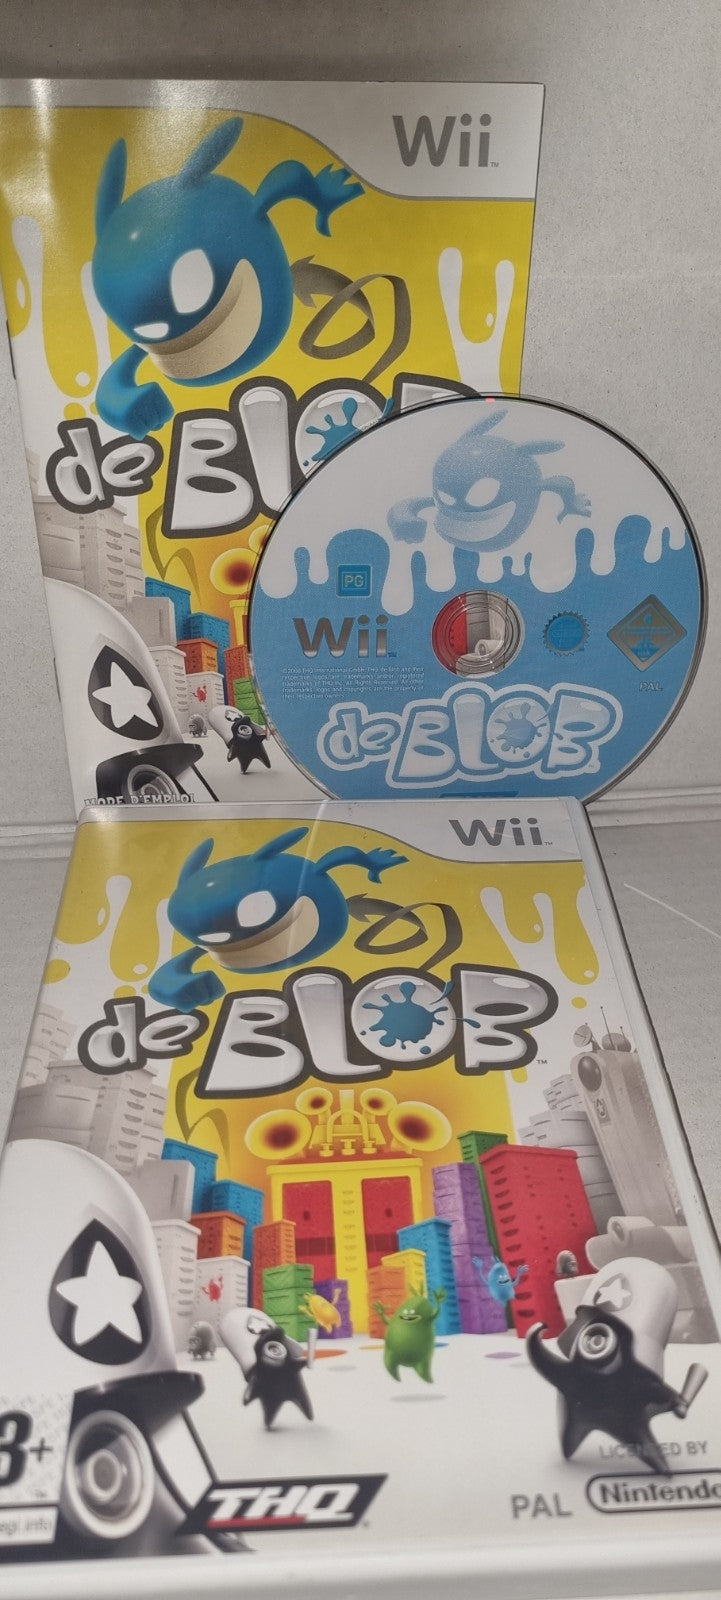 De Blob Nintendo Wii